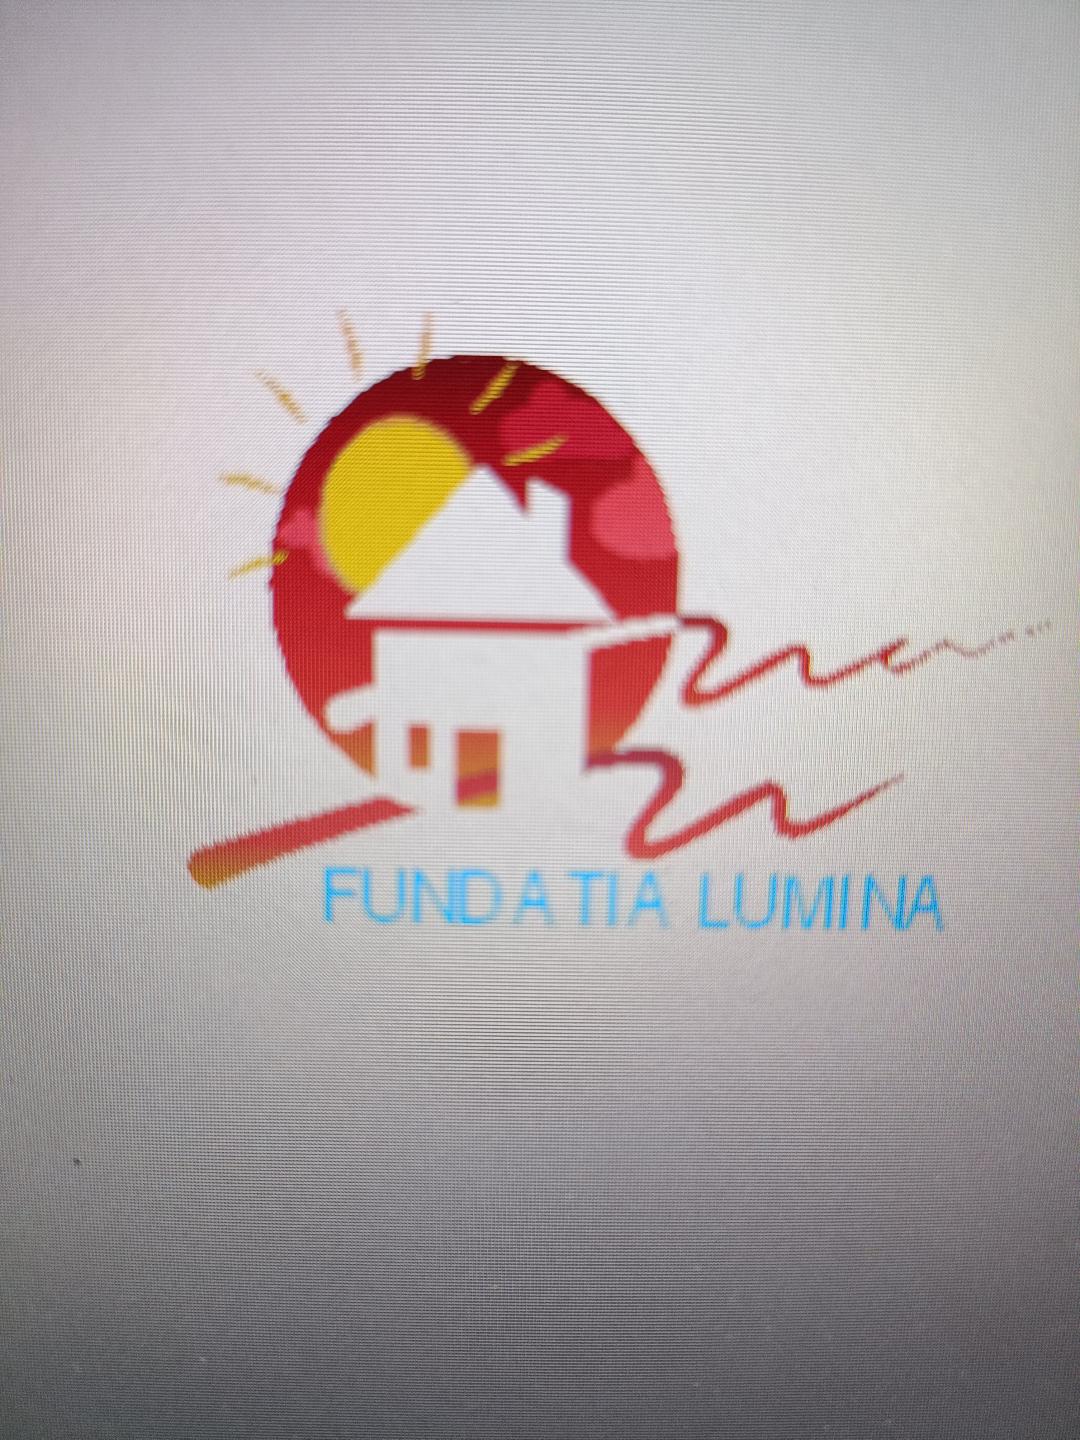 Fundatia Lumina Braila logo